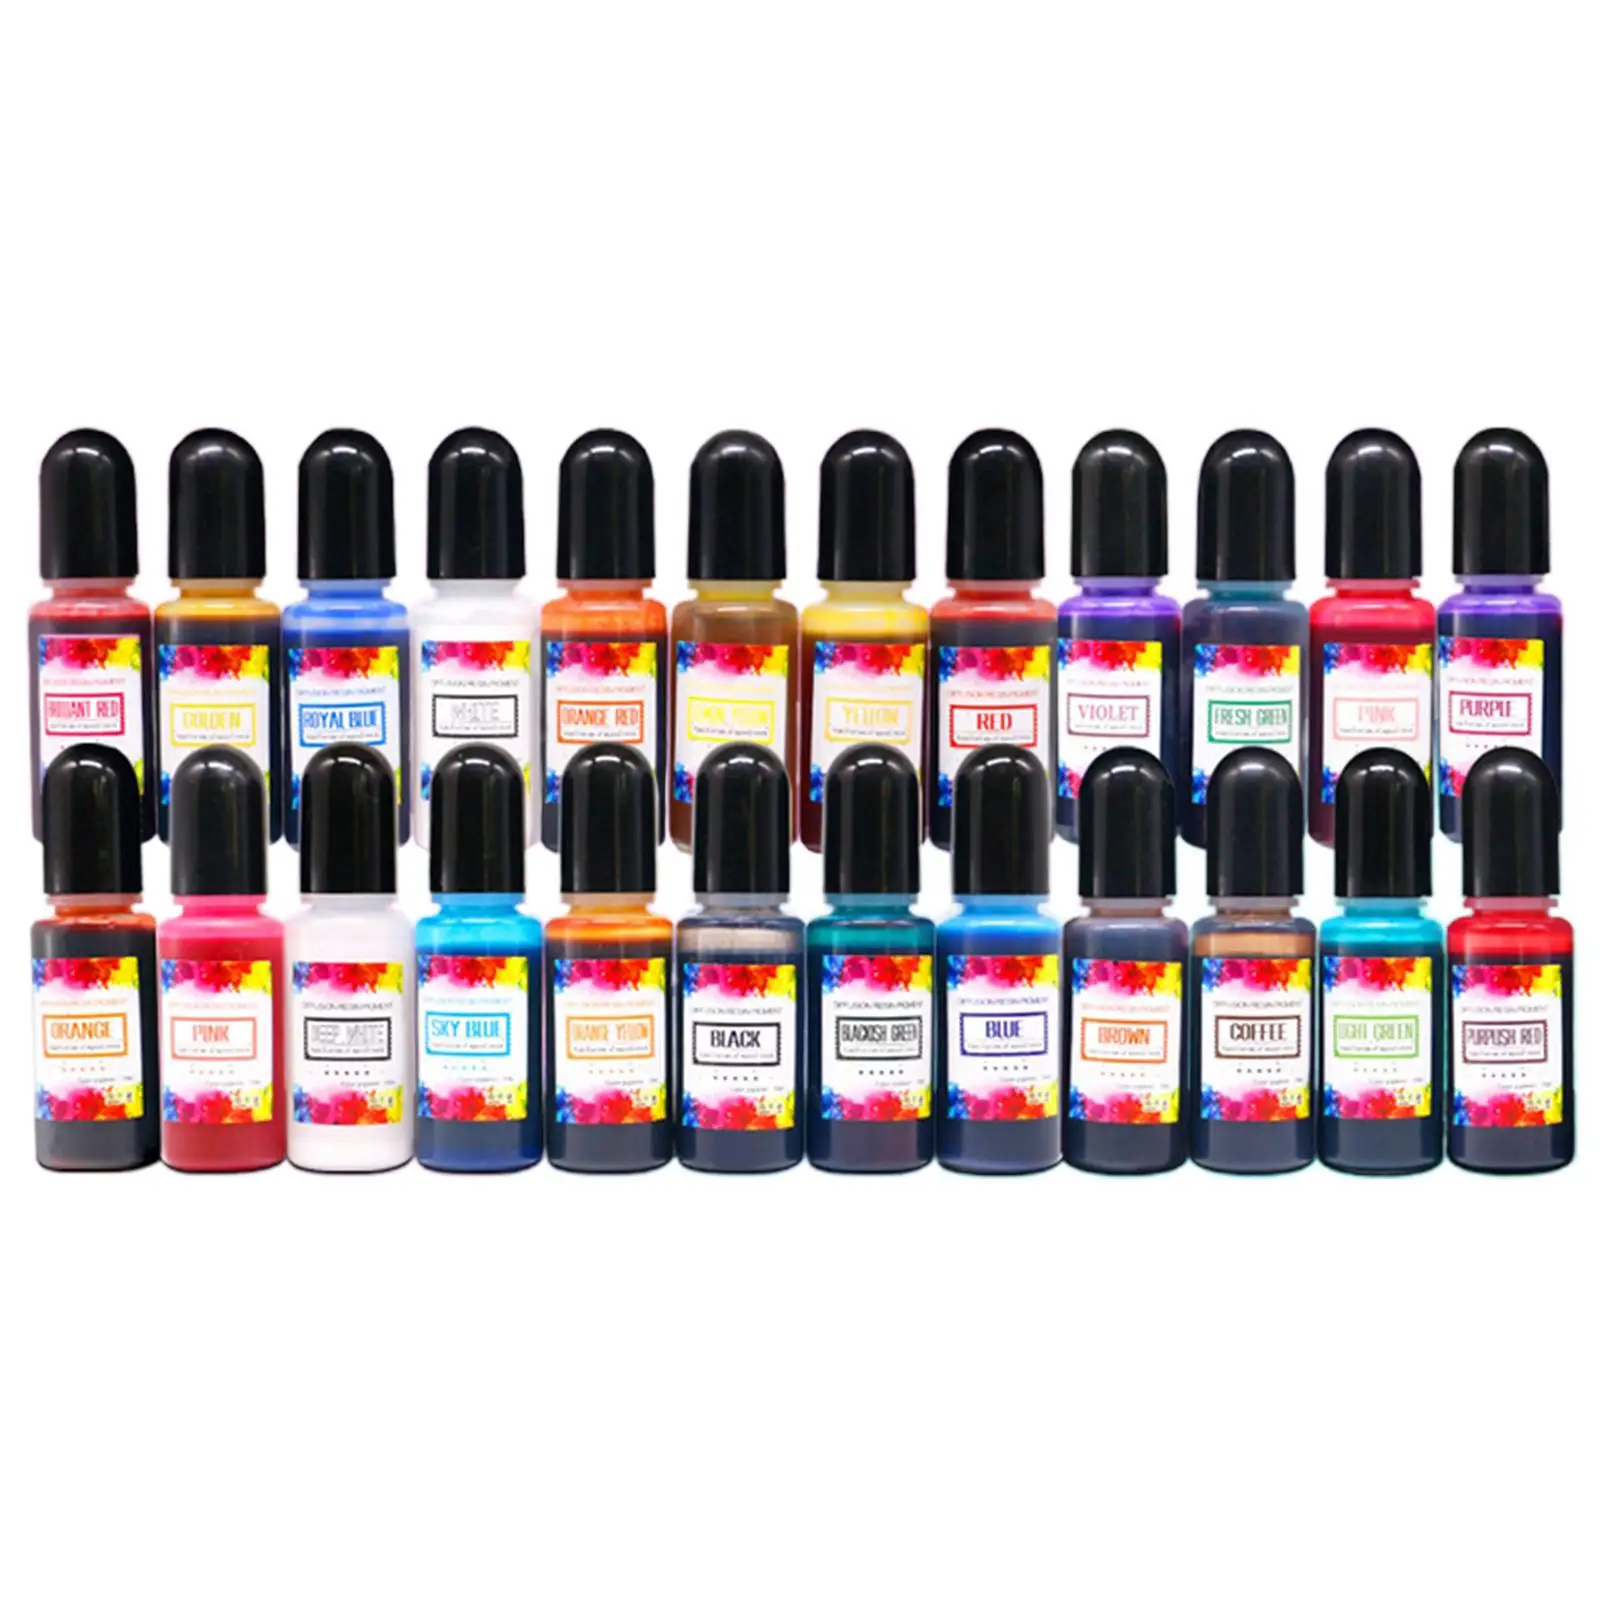 24x Vibrant Inks Epoxy Resin Pigment Vibrant Color Colorant Liquid Dye Color Drawing Tumbler Making Scrapbook DIY Crafts